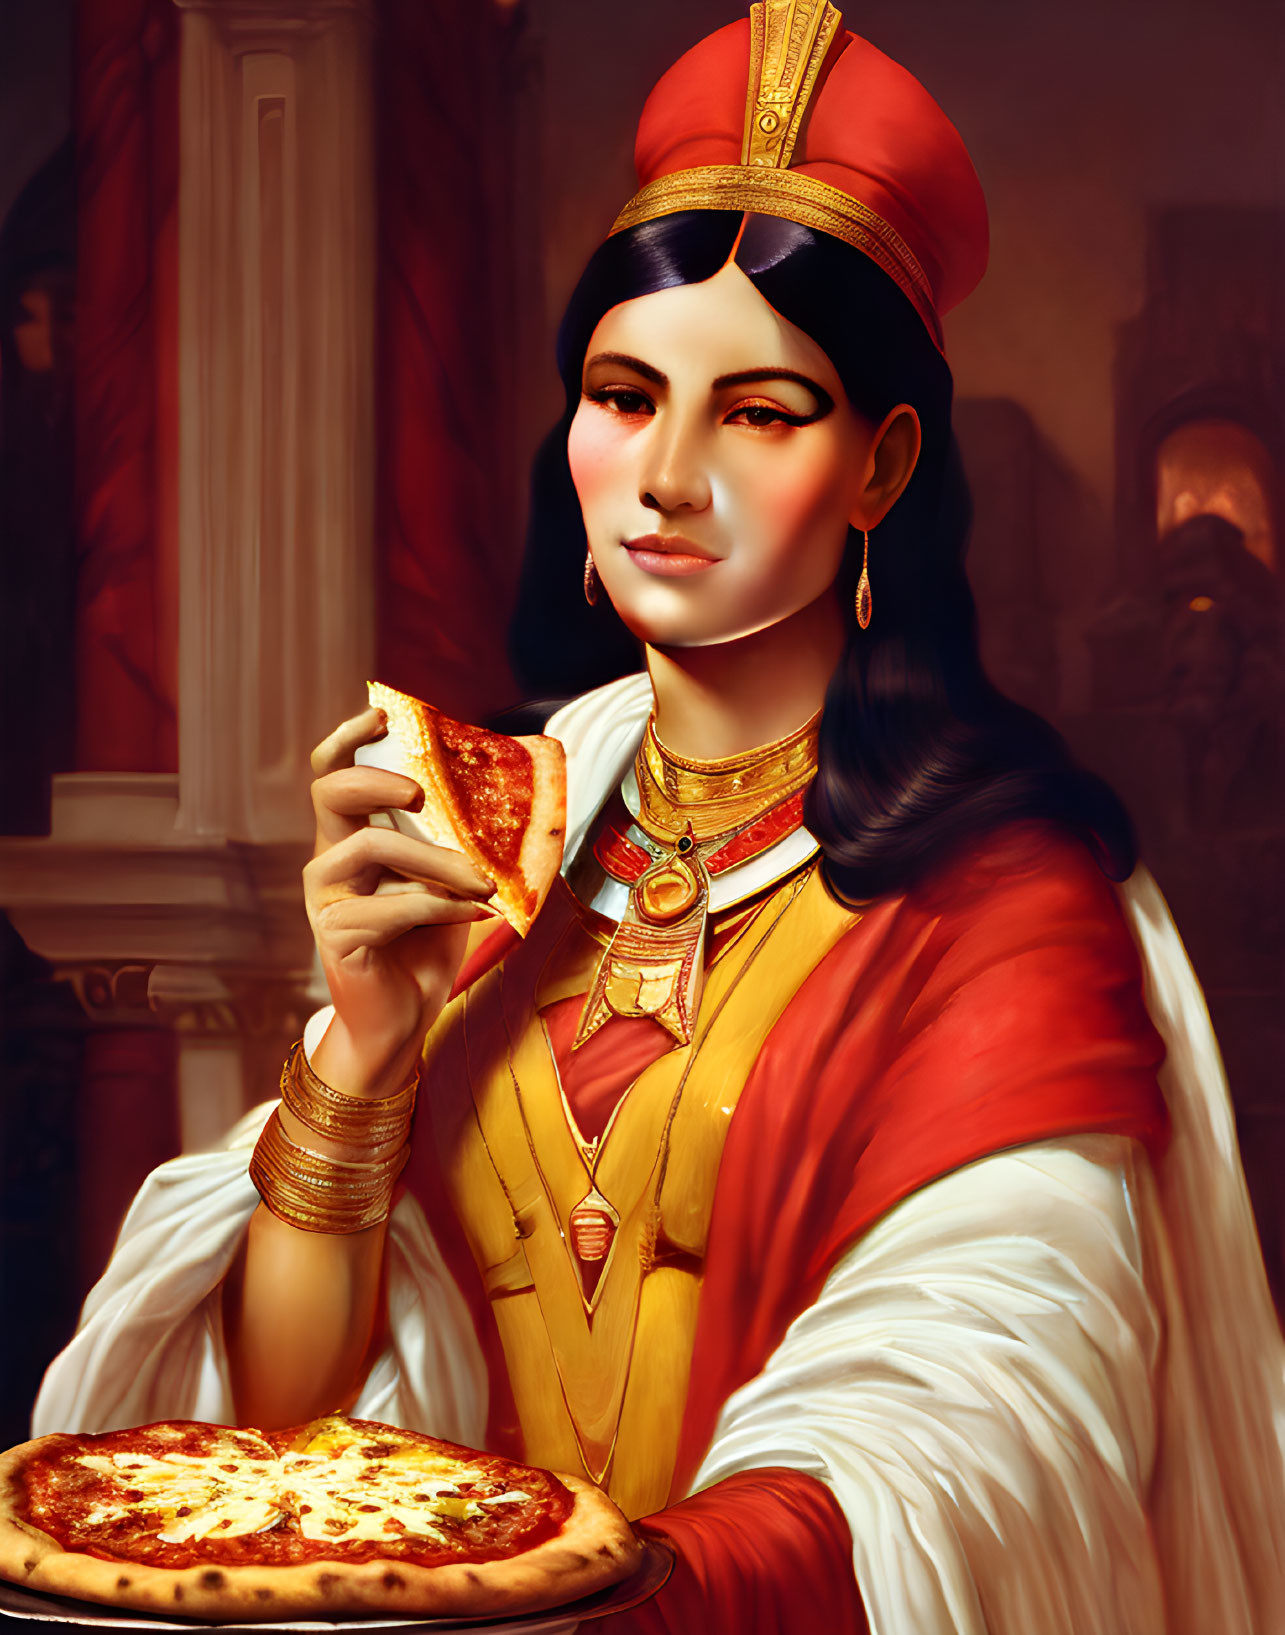 cleopatra comiendo pizza